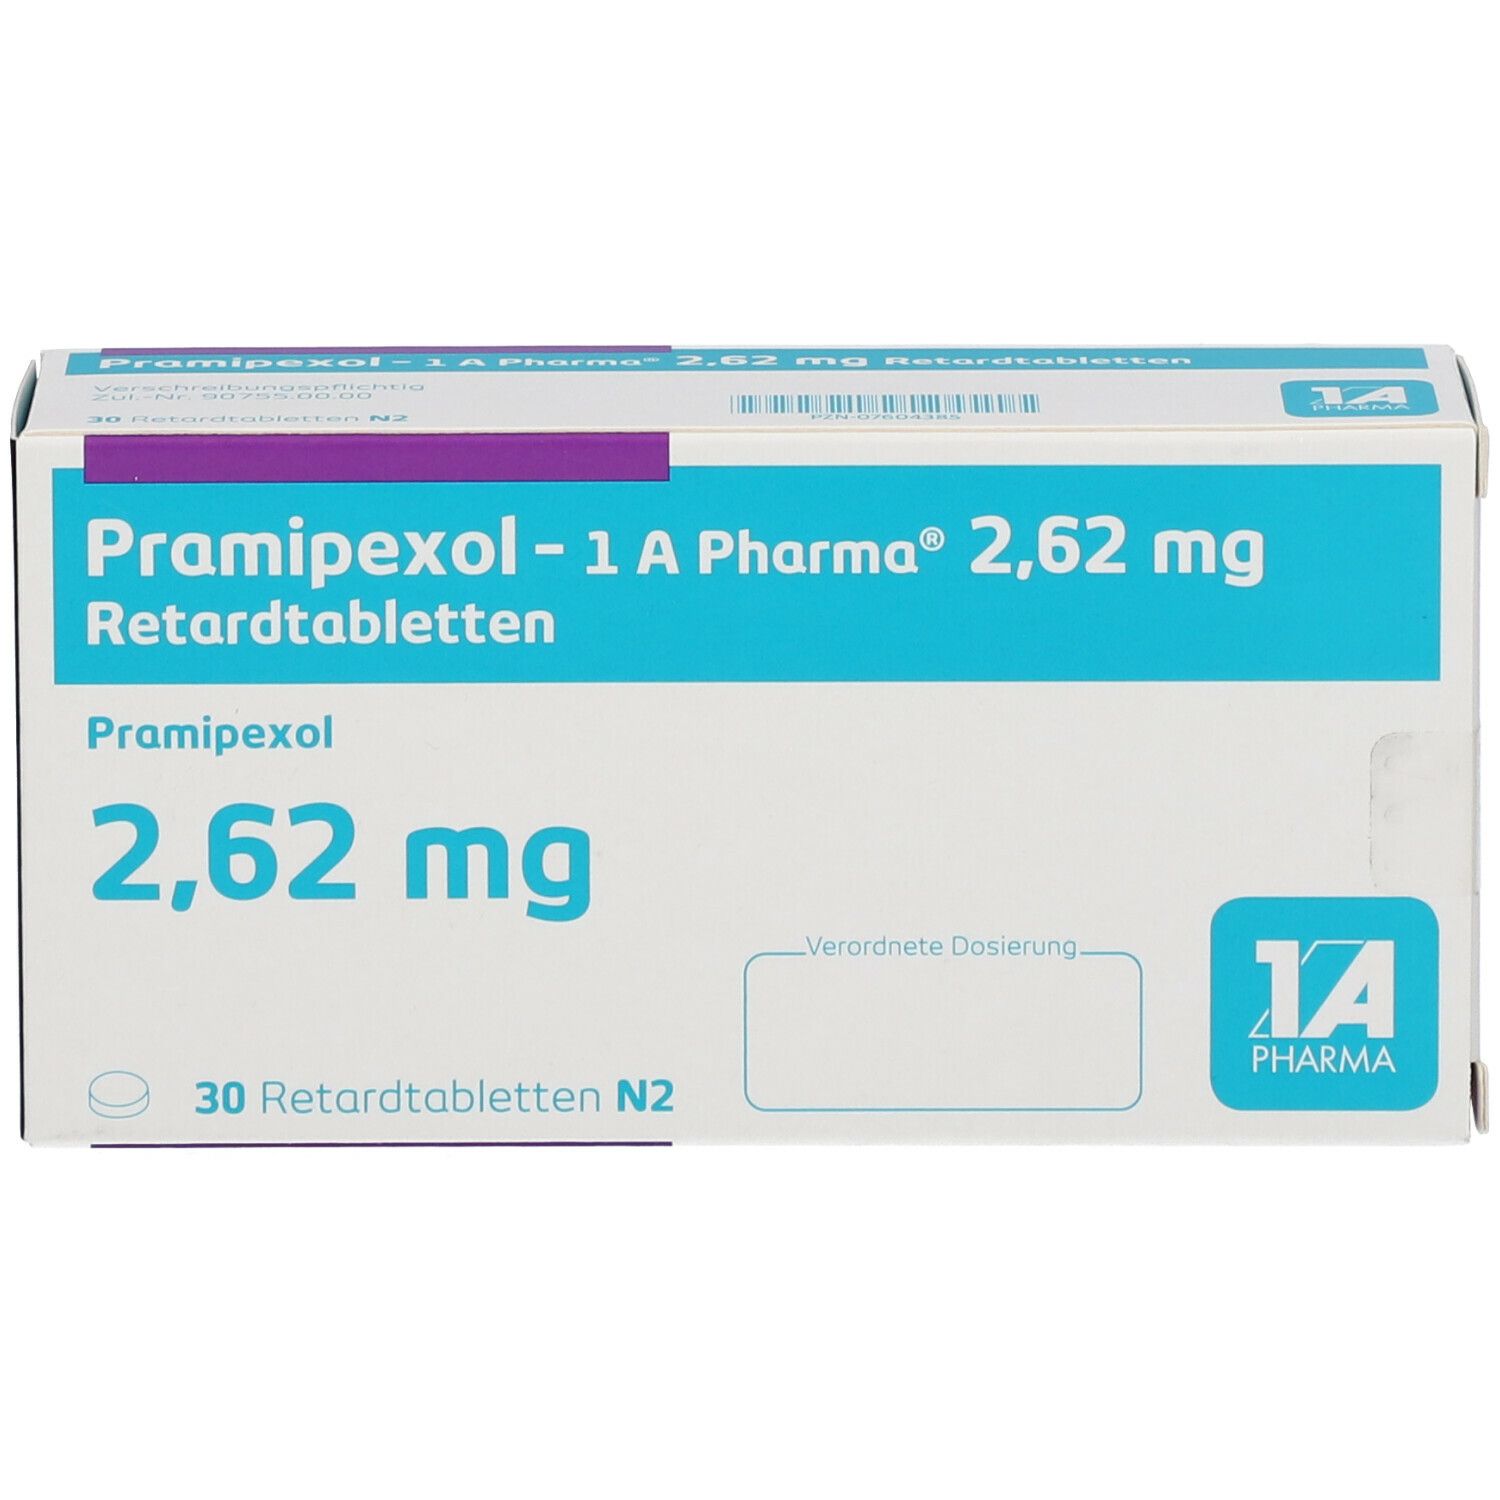 Pramipexol - 1 A Pharma® 2,62 mg